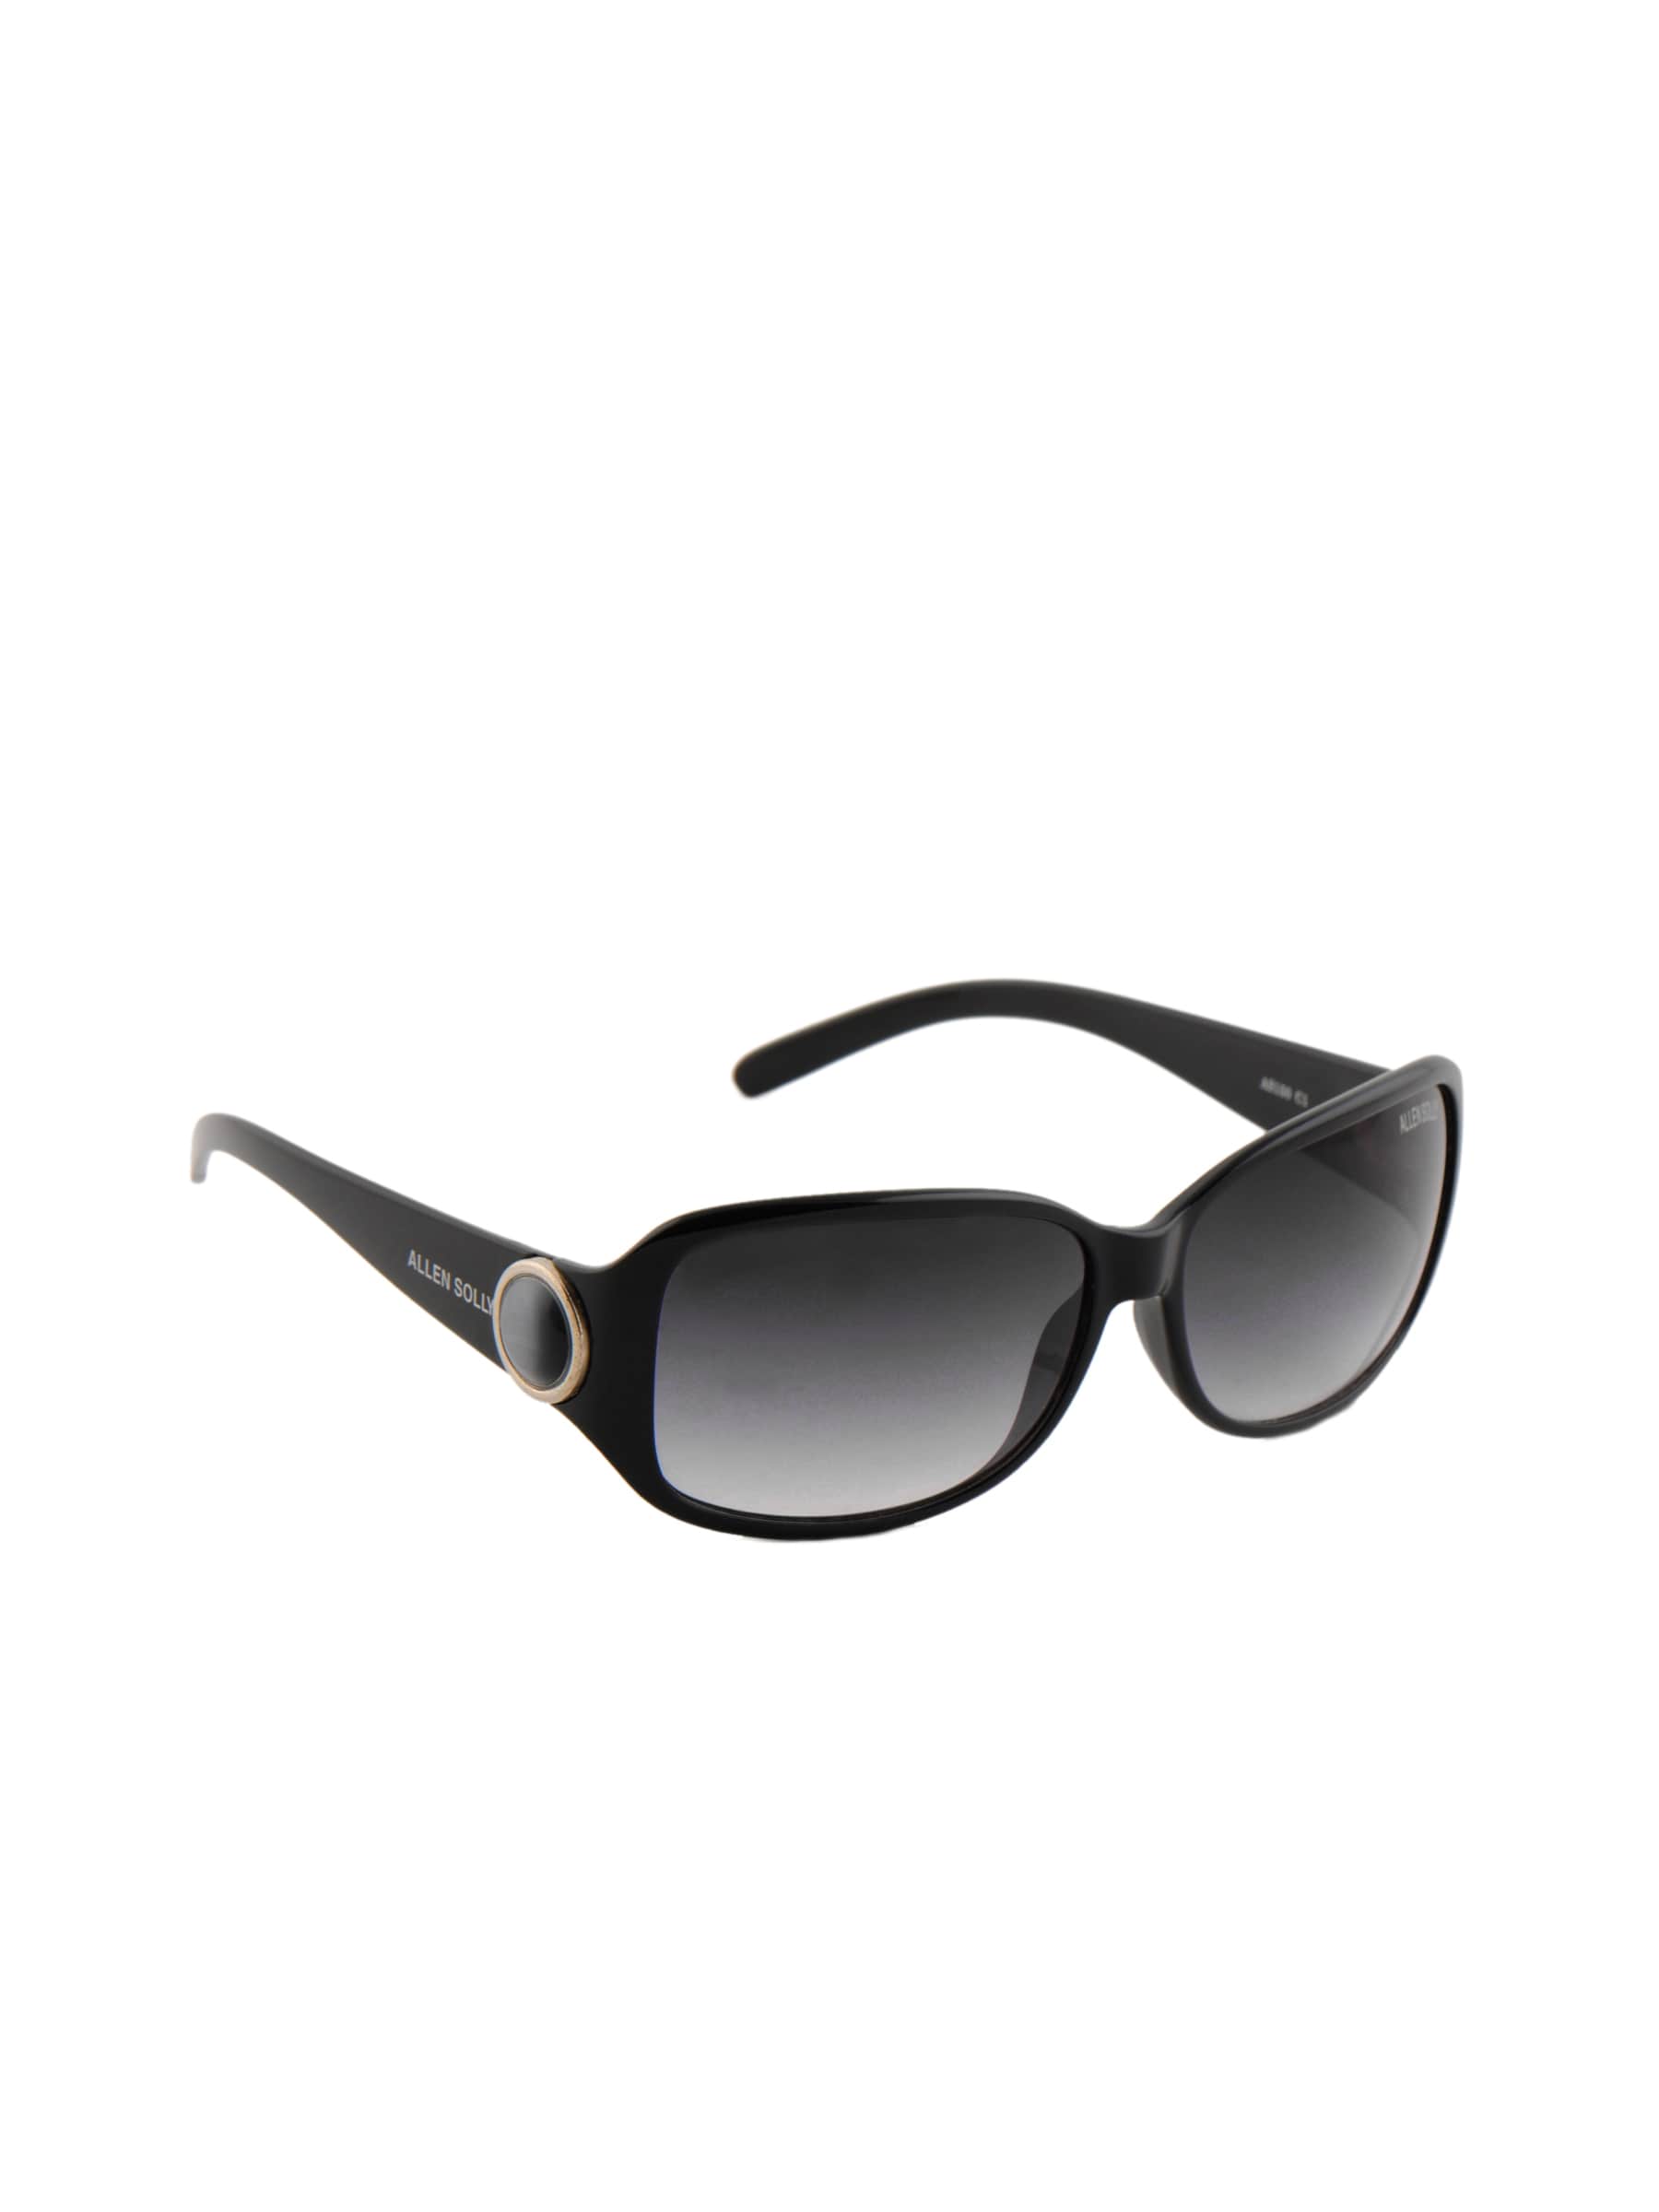 Allen Solly Women Sunglasses AS150-C1